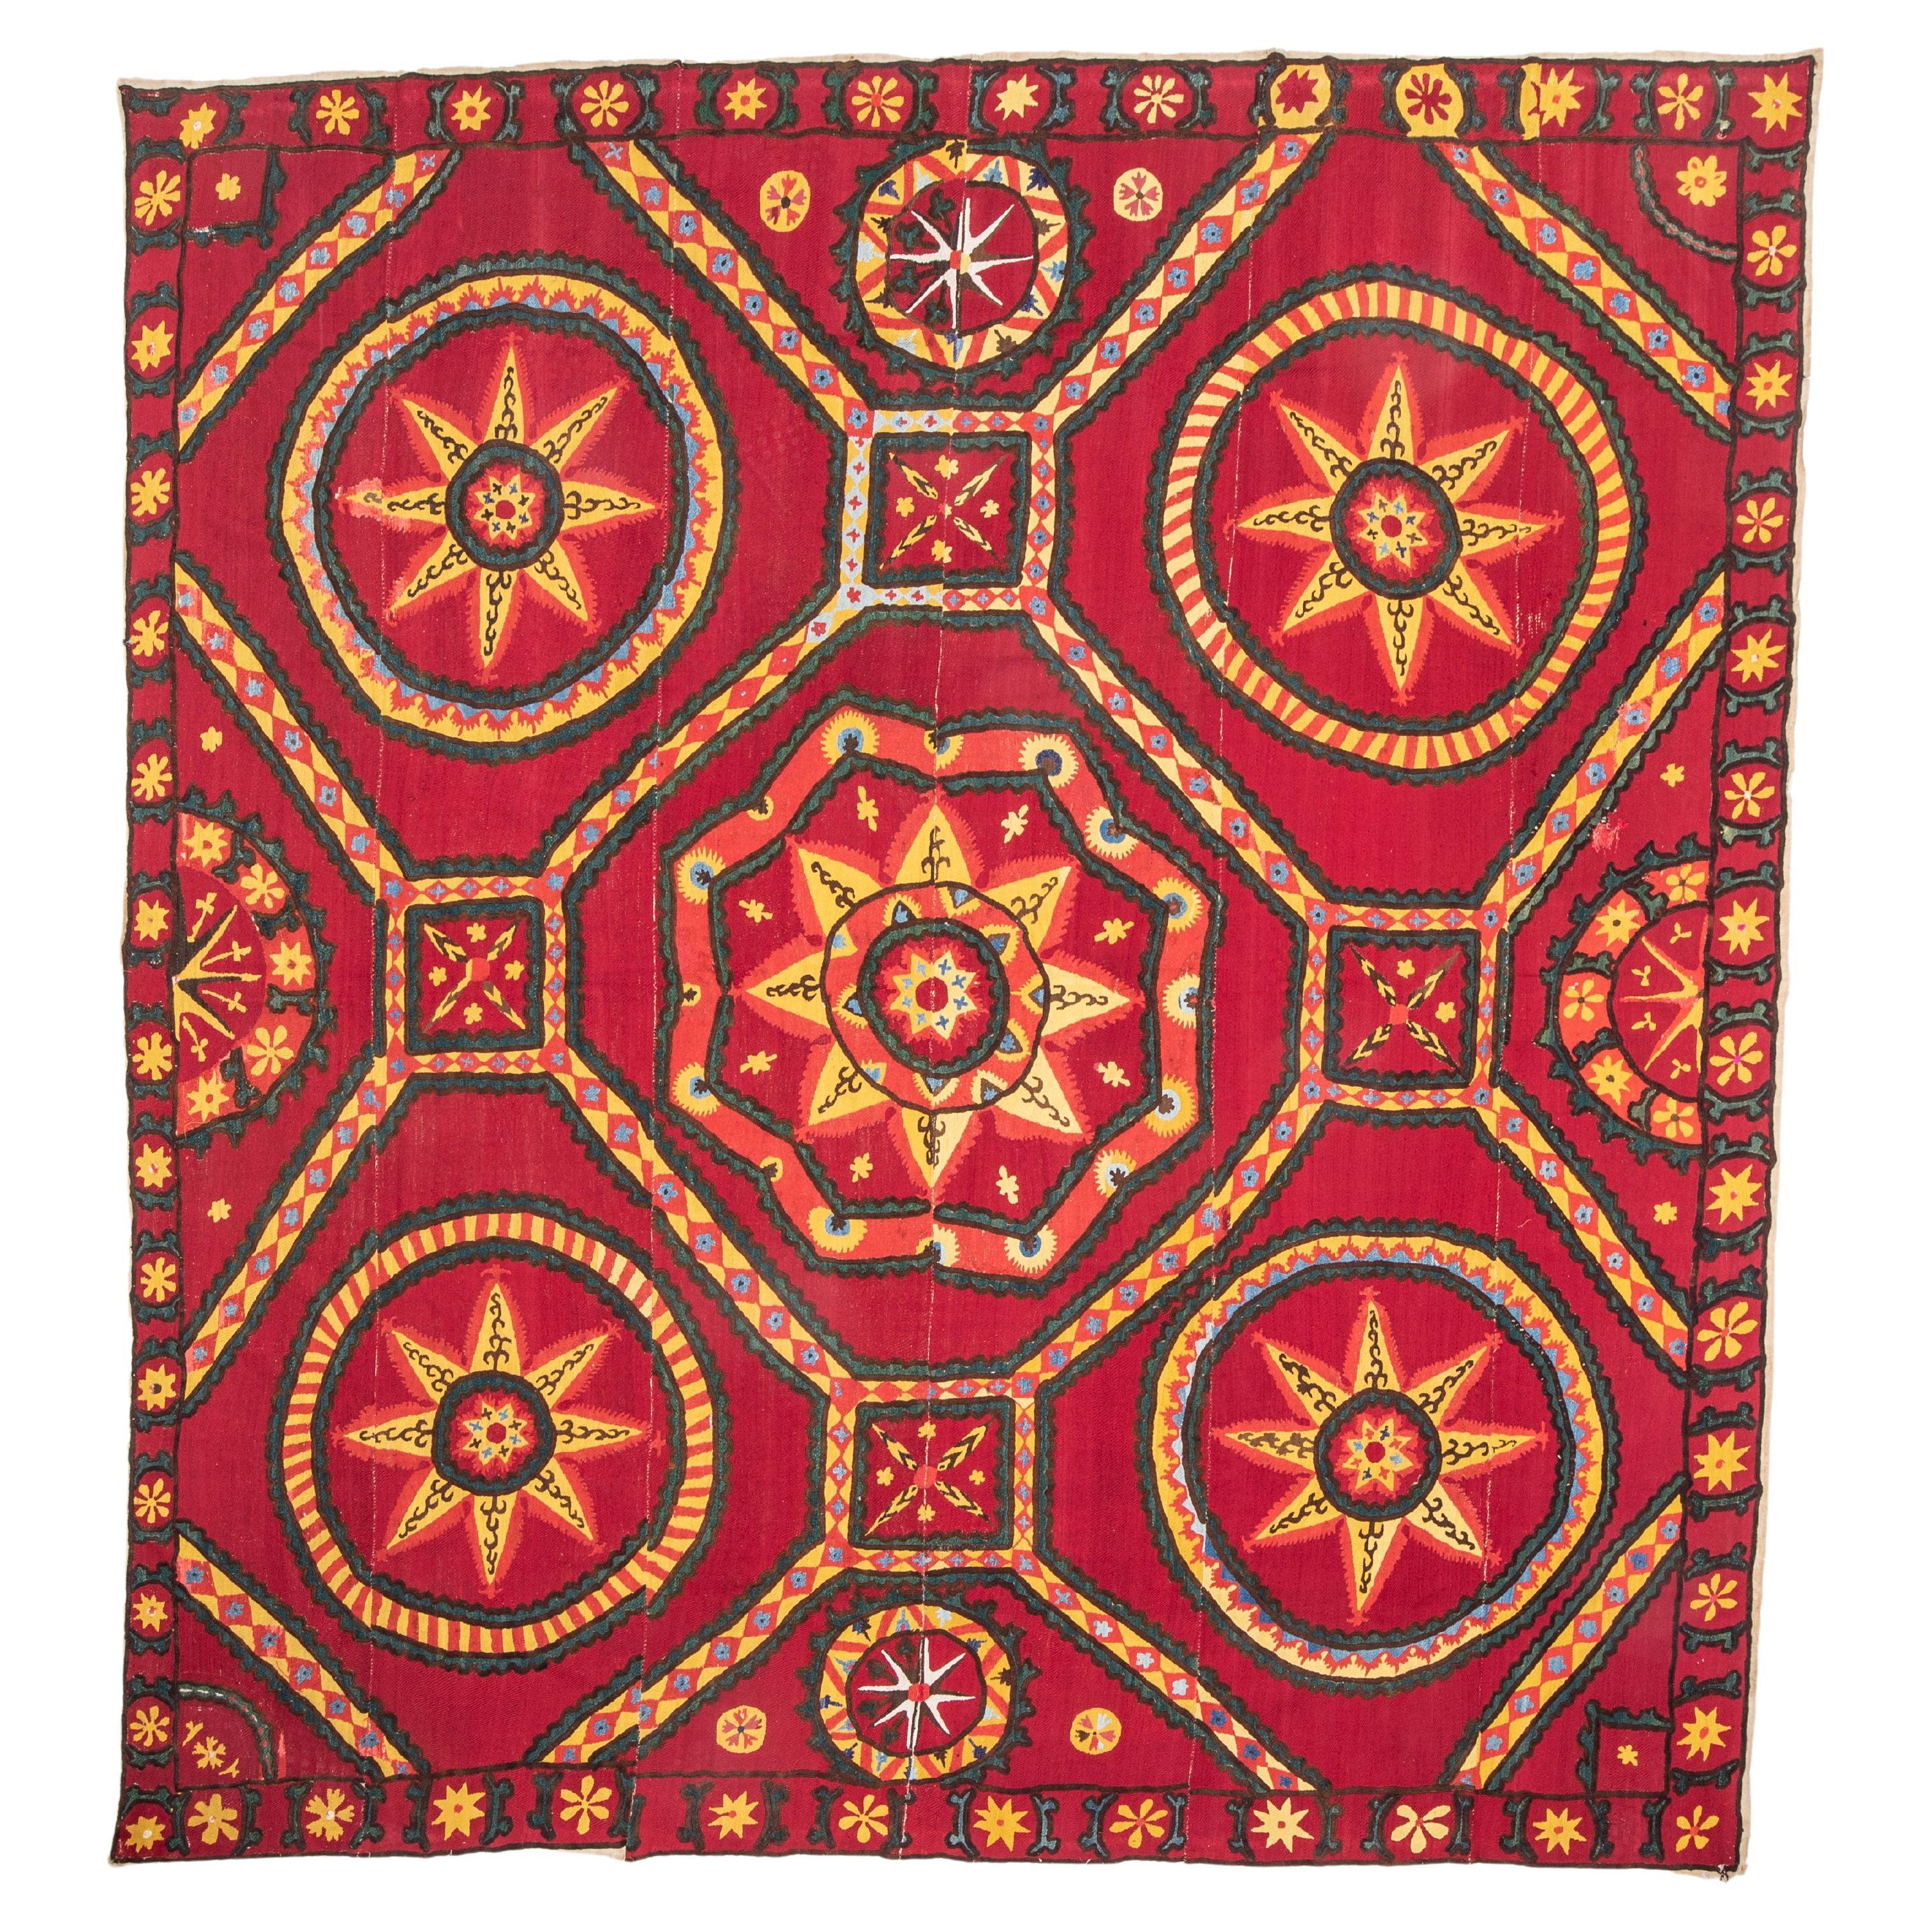 Fully Embroidered Antique Suzani from Pishkent, Uzbekistan, Late 19th Century